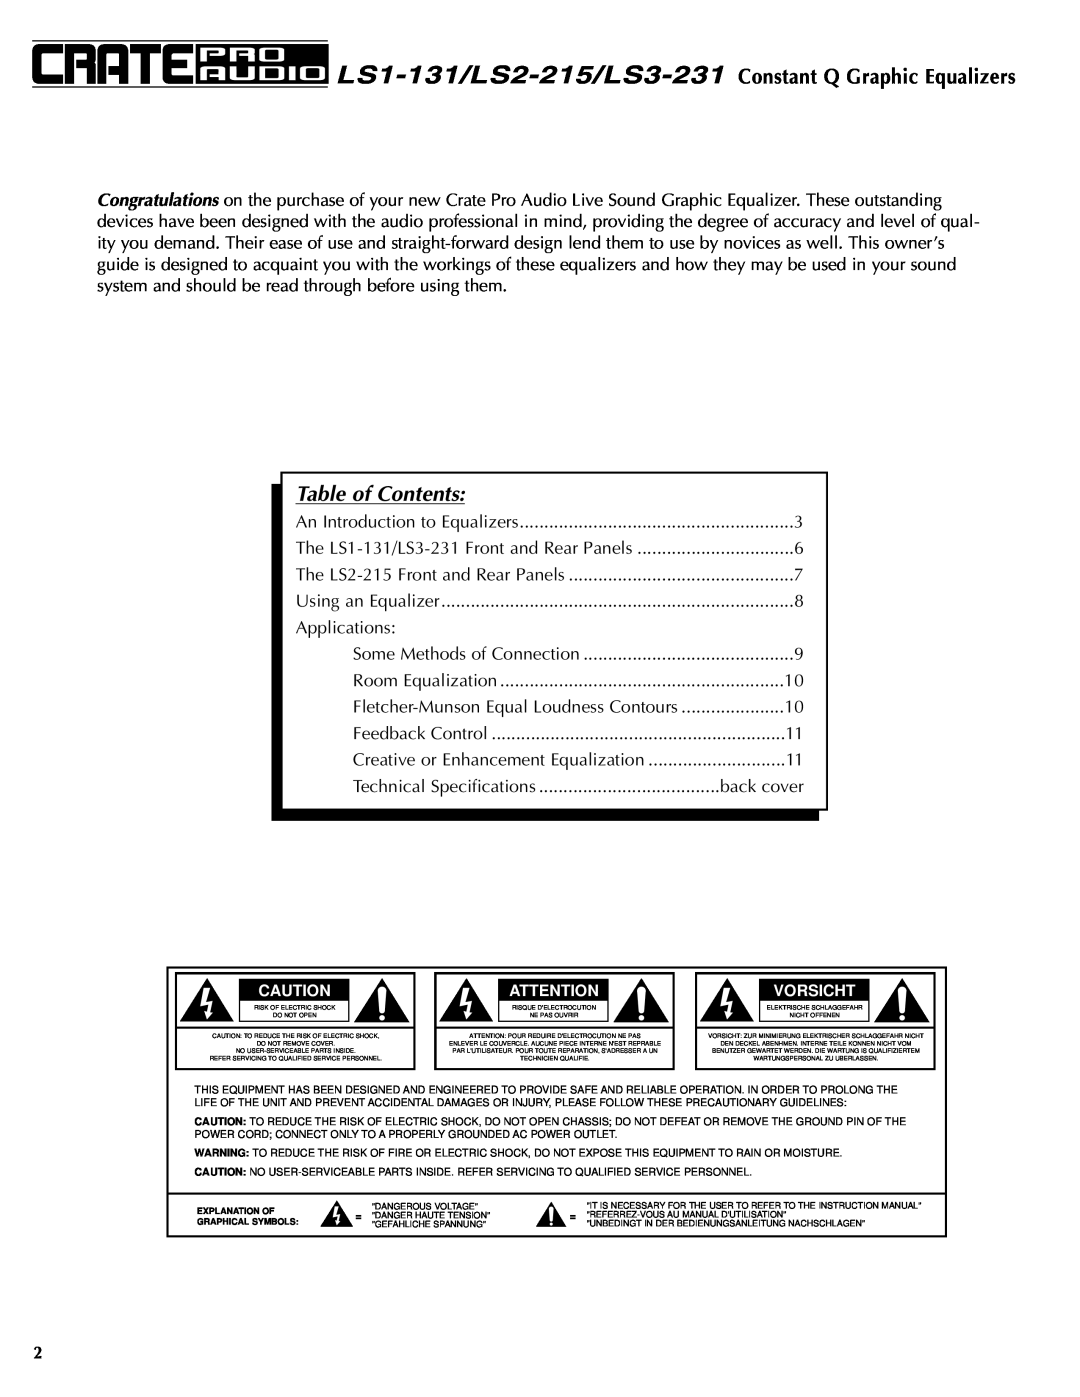 Crate Amplifiers LS2-215, LS3-231, LS1-131 manual Table of Contents 